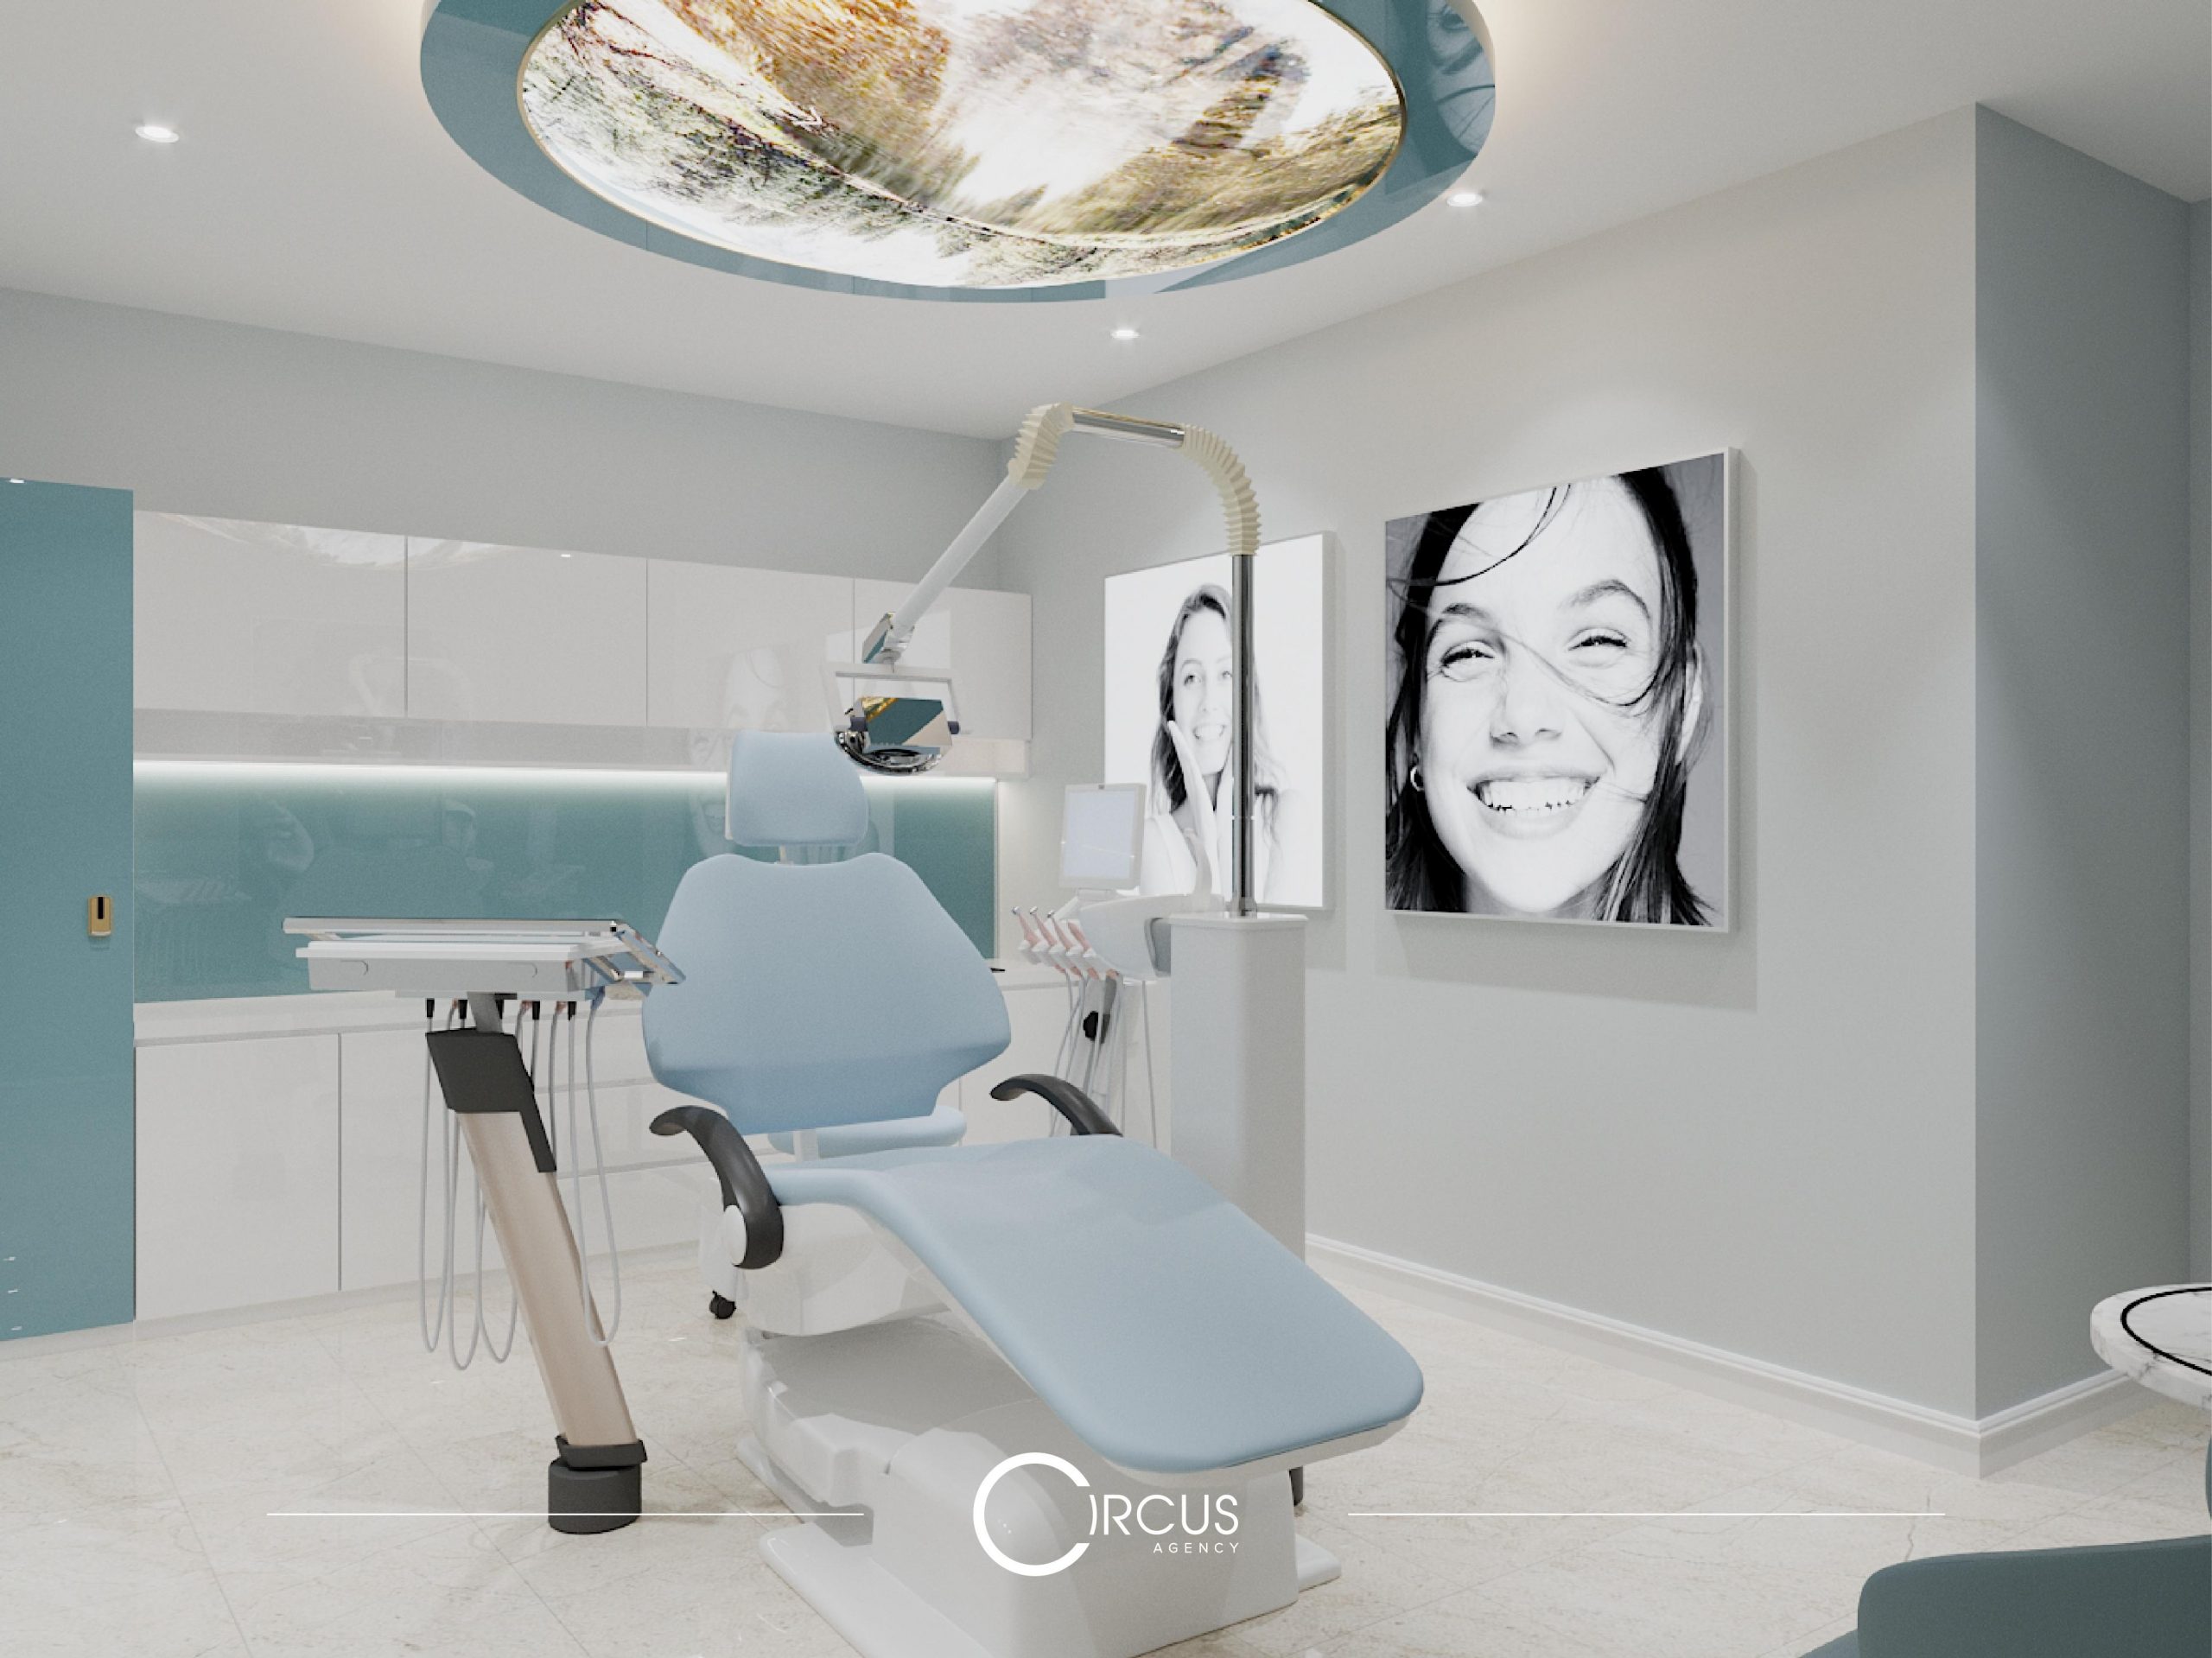 Nha khoa DC Dentisst, Trung tâm nha khoa DC Dentist, Phòng khám nha khoa DC Dentist, Nha khoa thẩm mỹ quốc tế DC Dentist